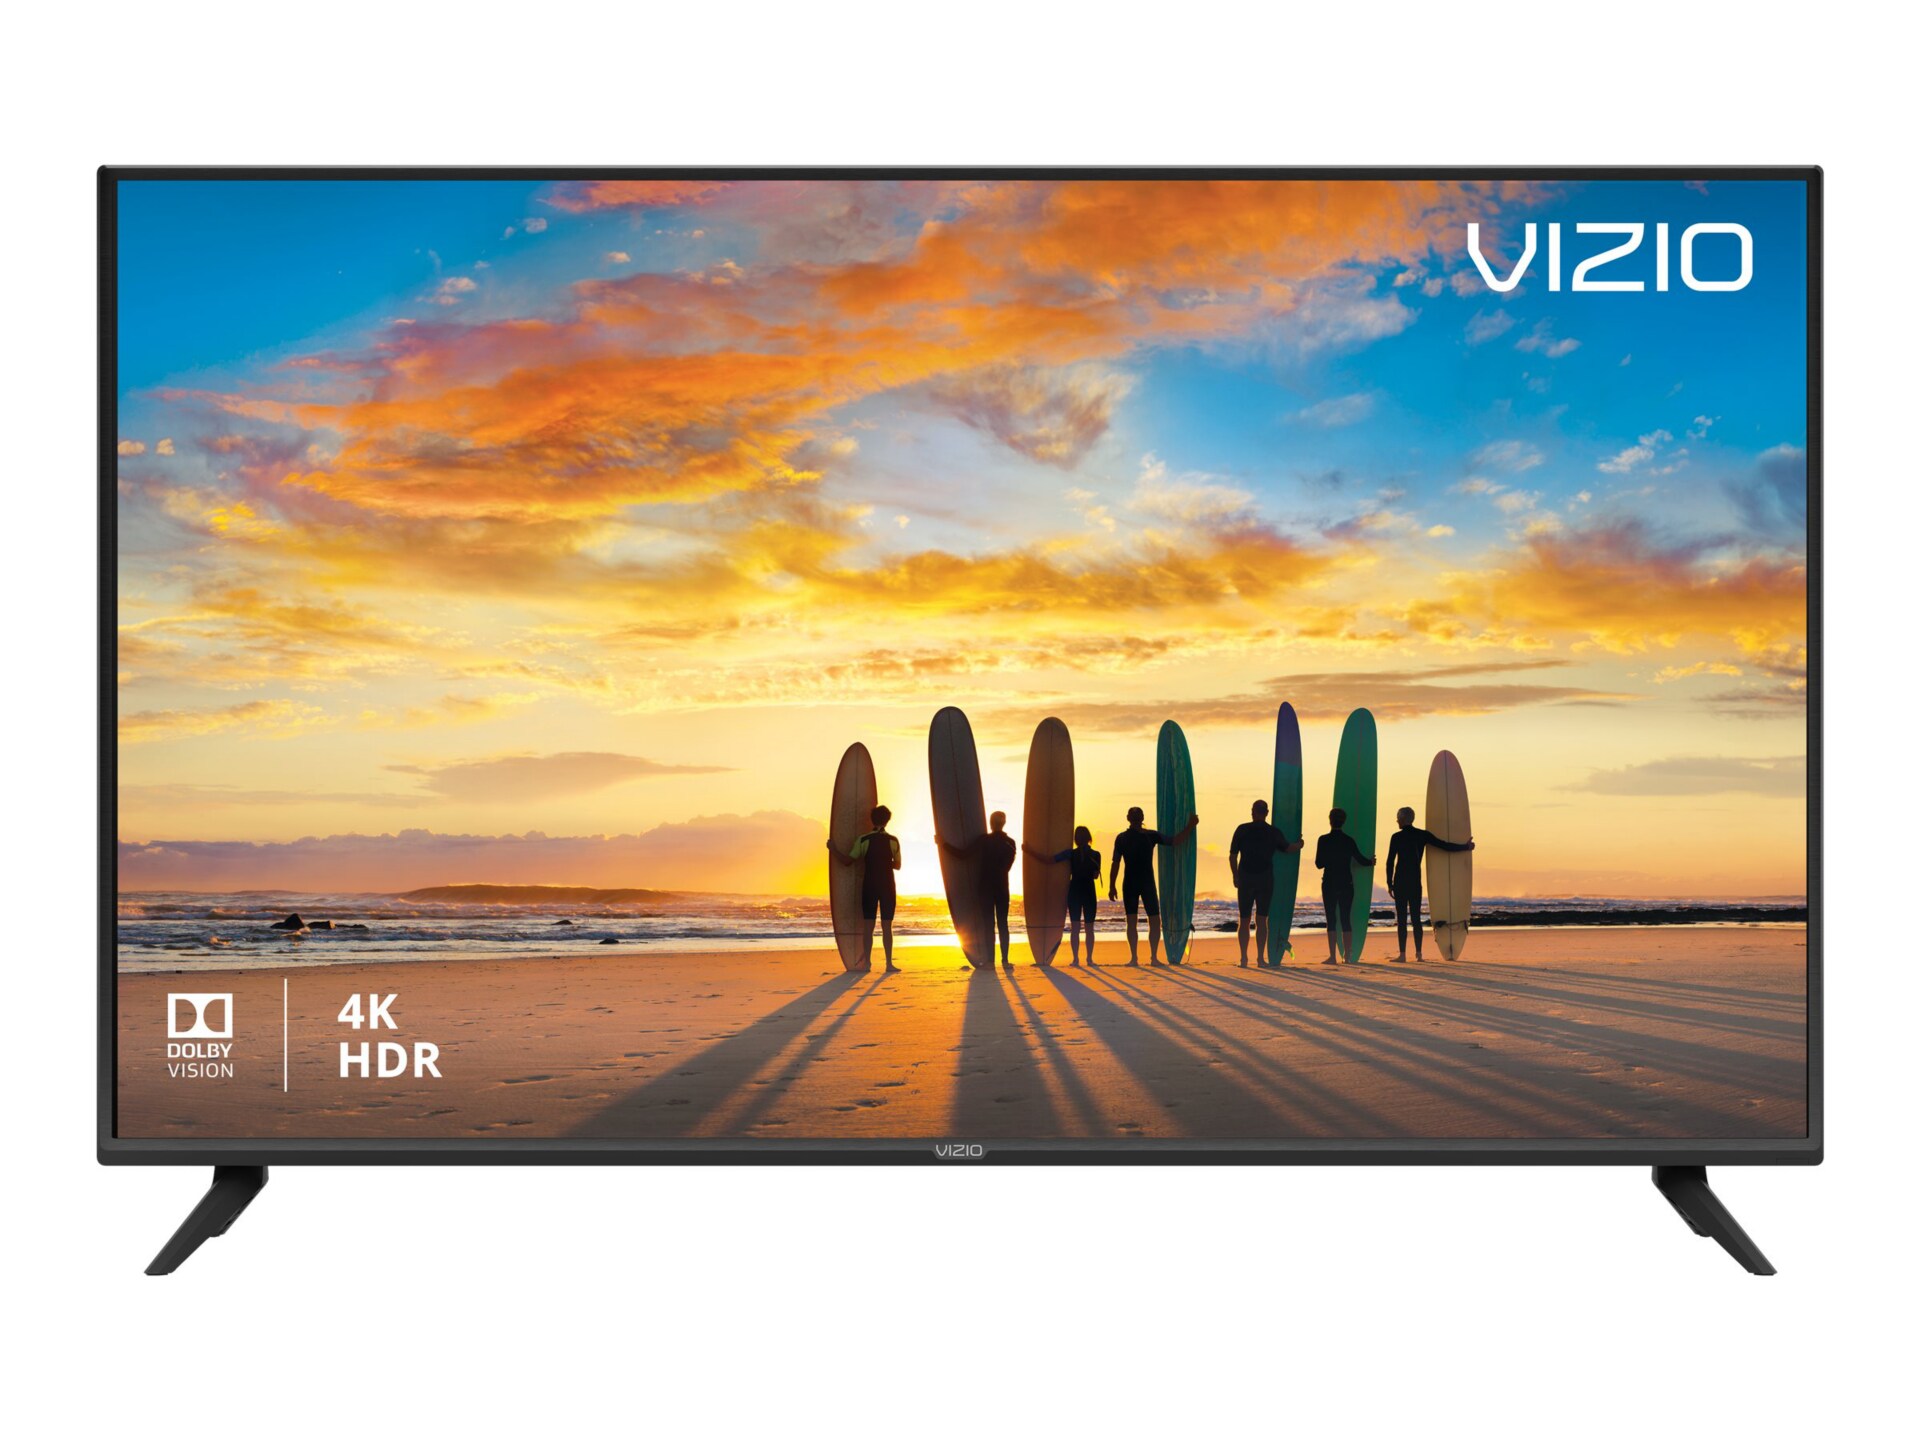 VIZIO V505-G9 50" Class (49.5" viewable) LED TV